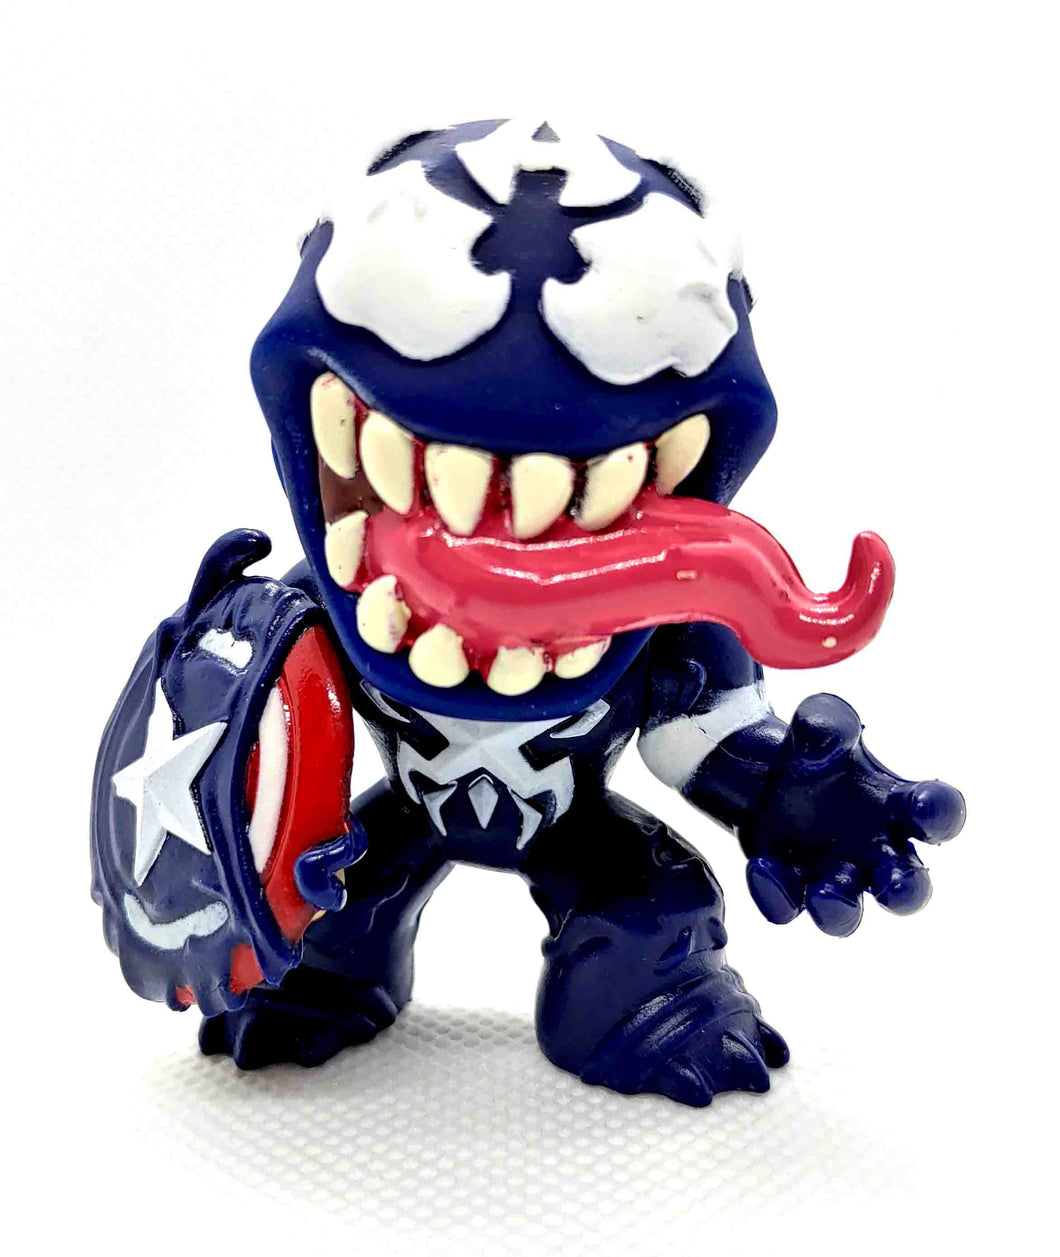 Toy Superhero Bobblehead - Funko Pop - Venom Mini Figure X Captain America - From Blindbox - 2020